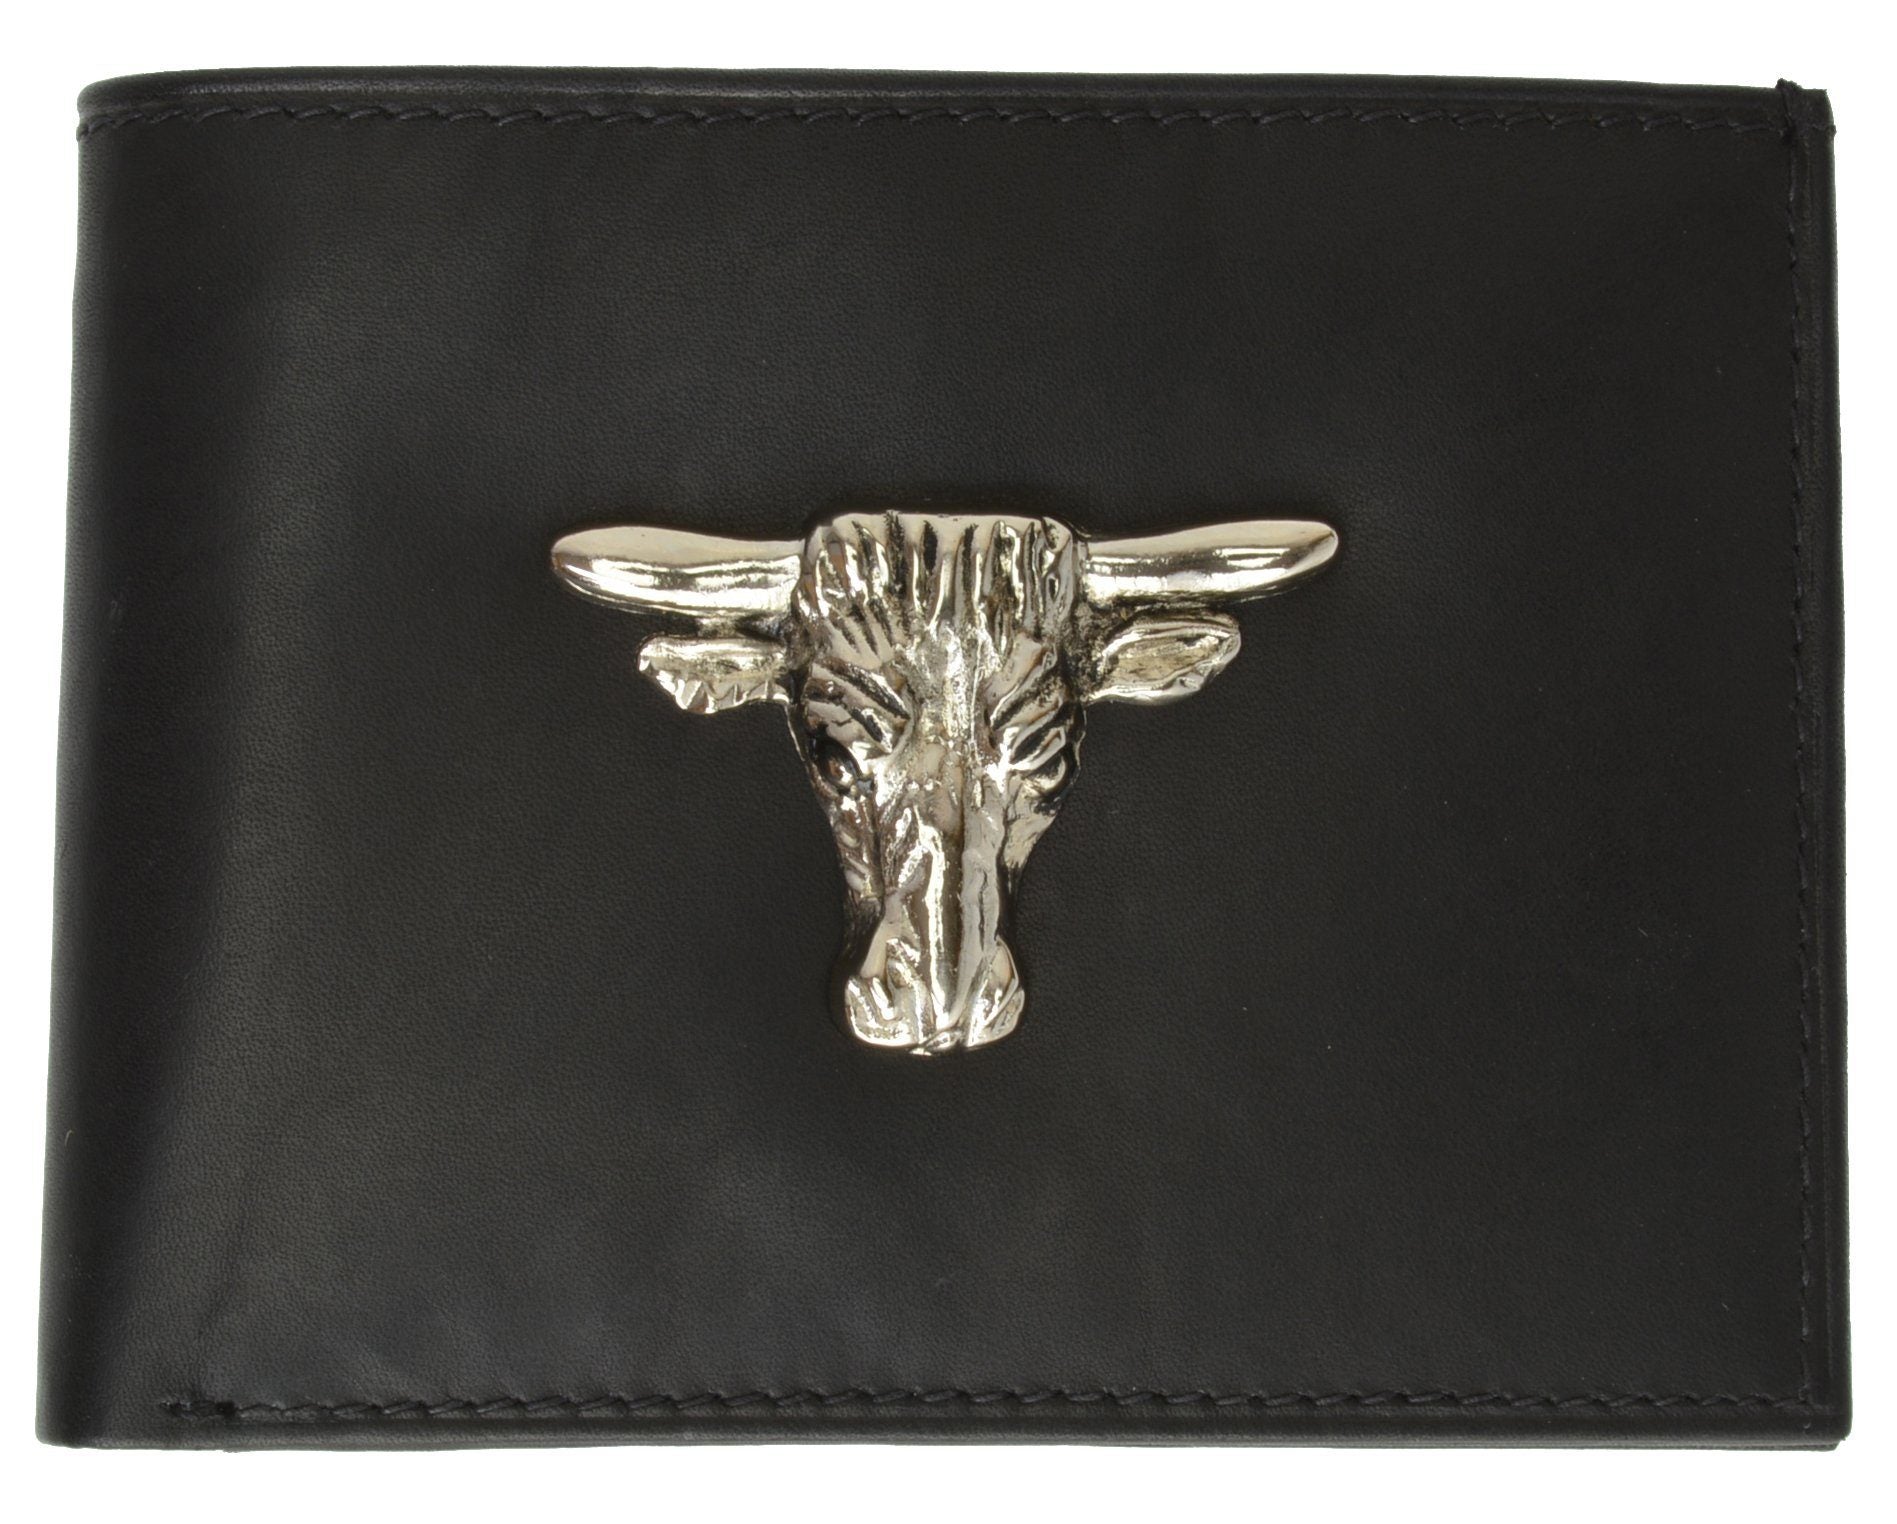 Taurus Leather Bi-fold Man Wallet